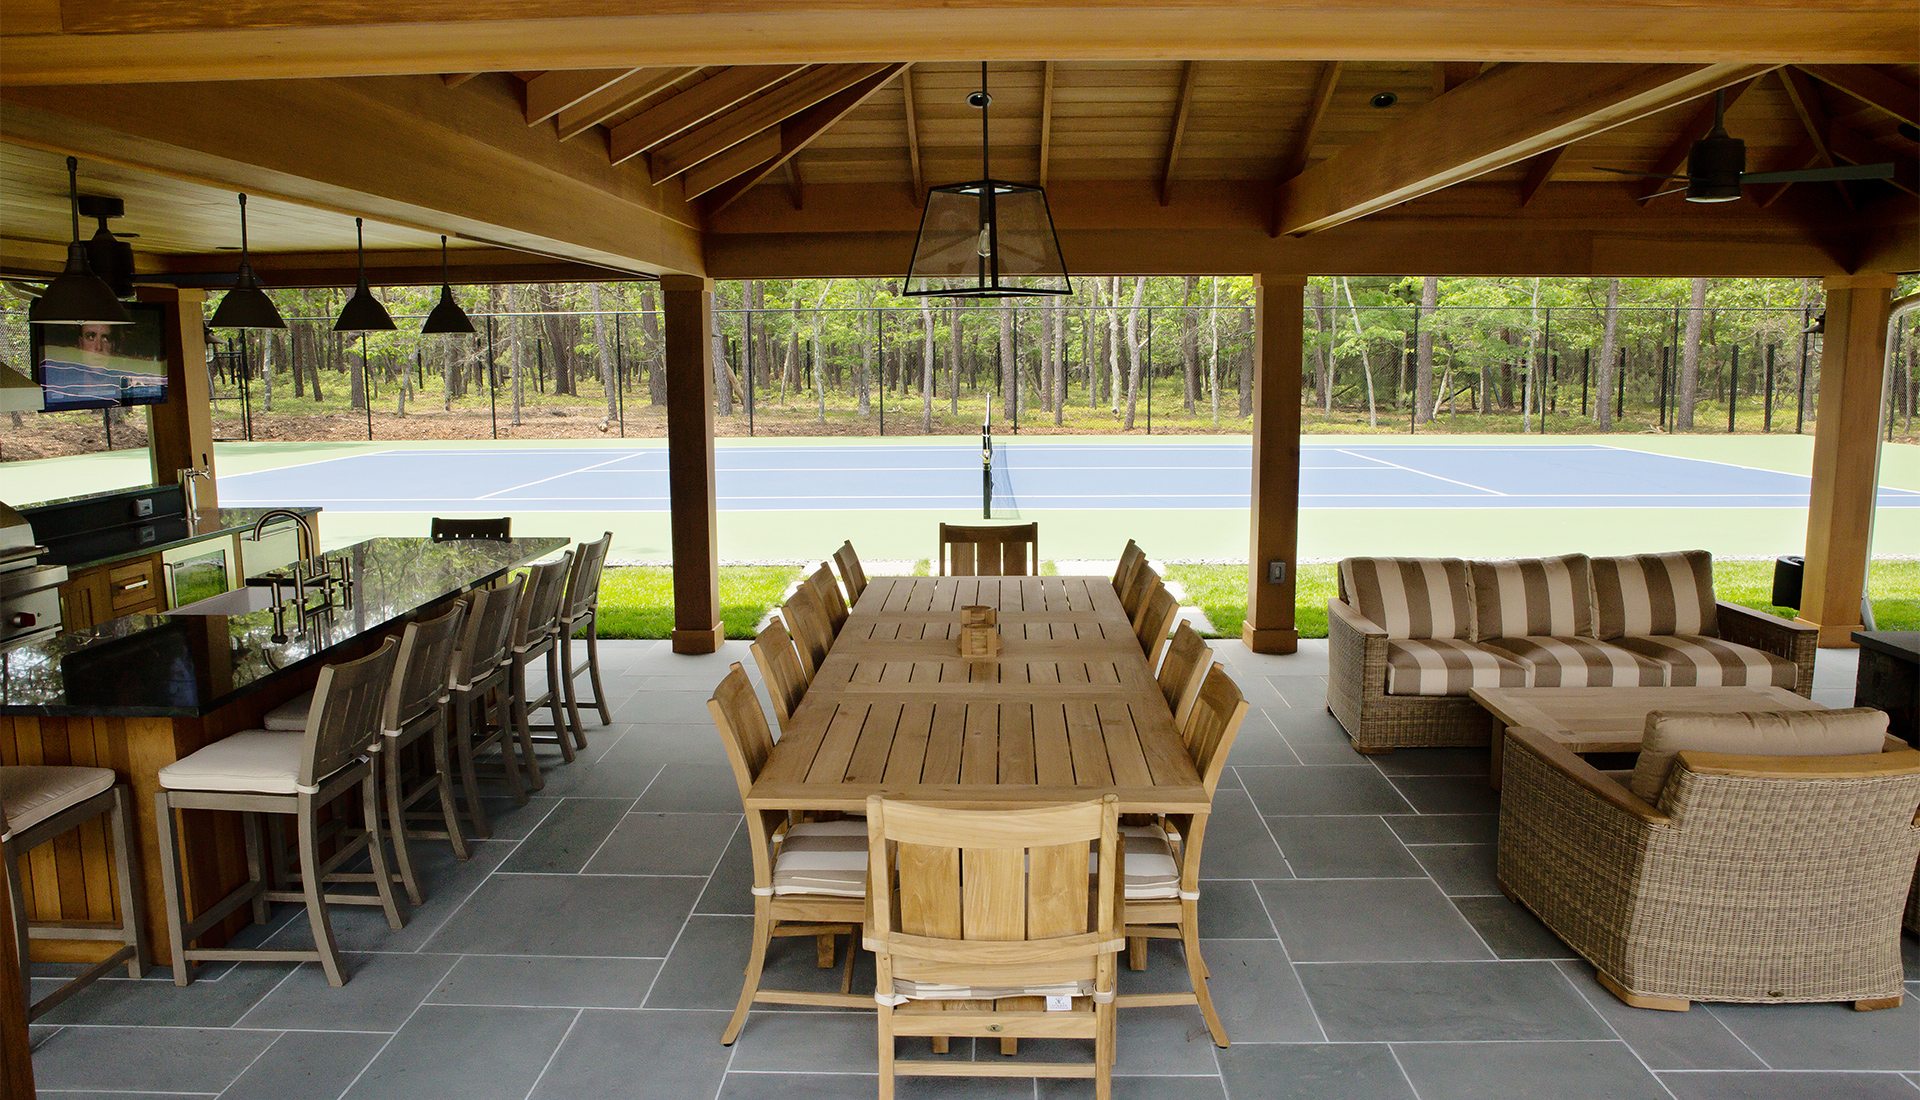 Hamptons Builder | landscaping | masonry | outdoor kitchen